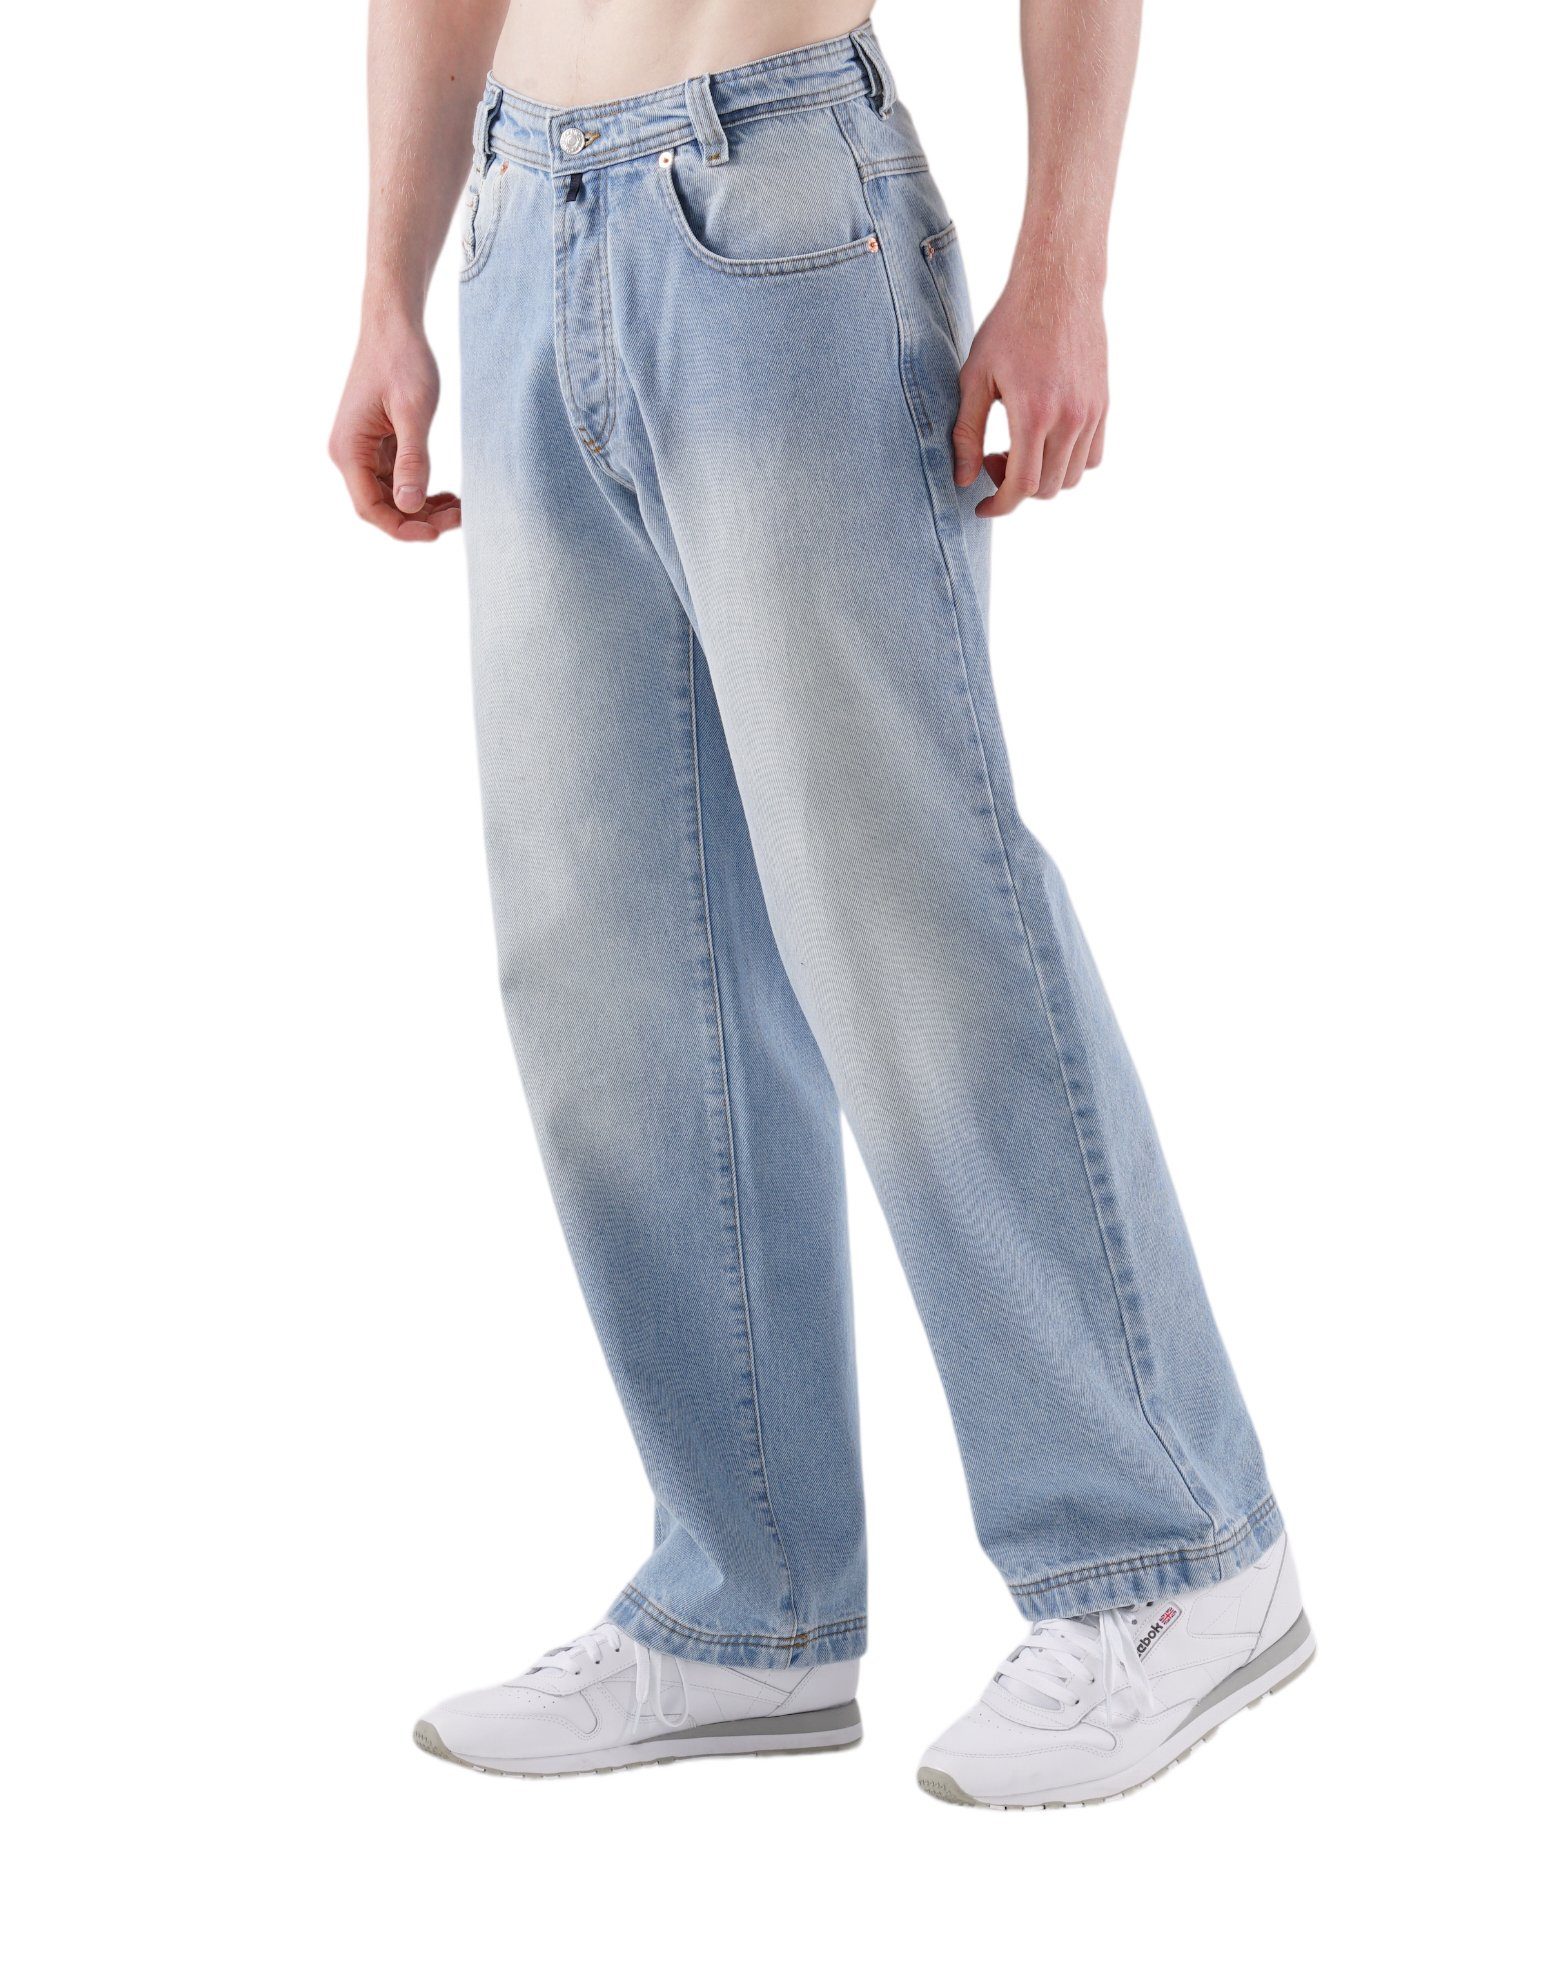 474 Jeans Baggy Schnitt Las lässiger Vegas Fit, PICALDI Zicco Leg, Gerader Weite Straight Jeans